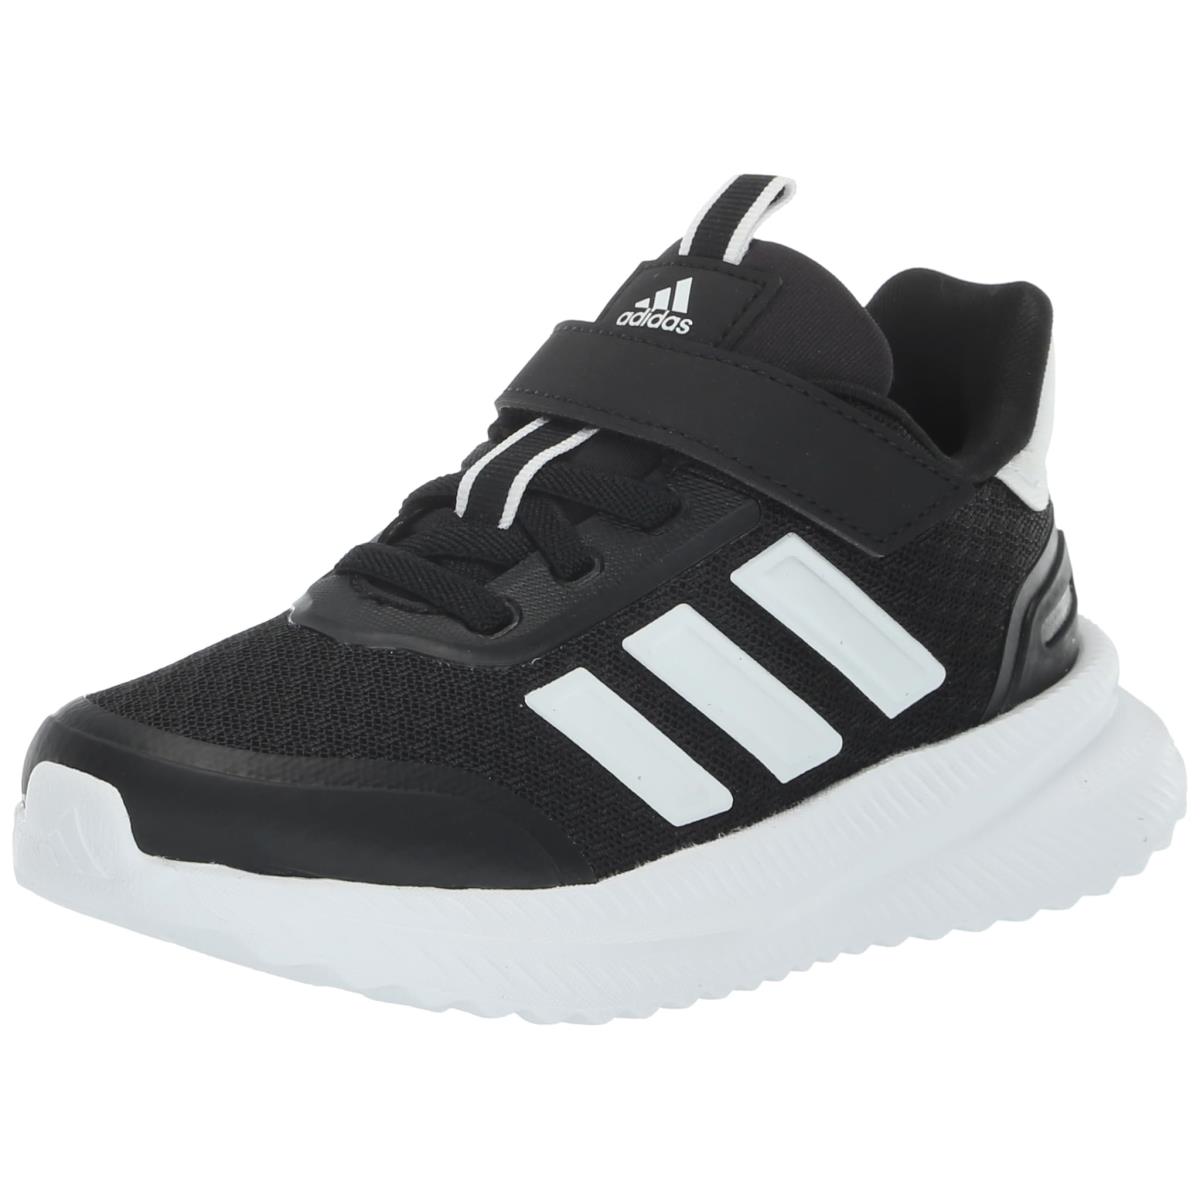 Adidas Unisex-child X_plr Hook Loop Sneaker Black/White/Black